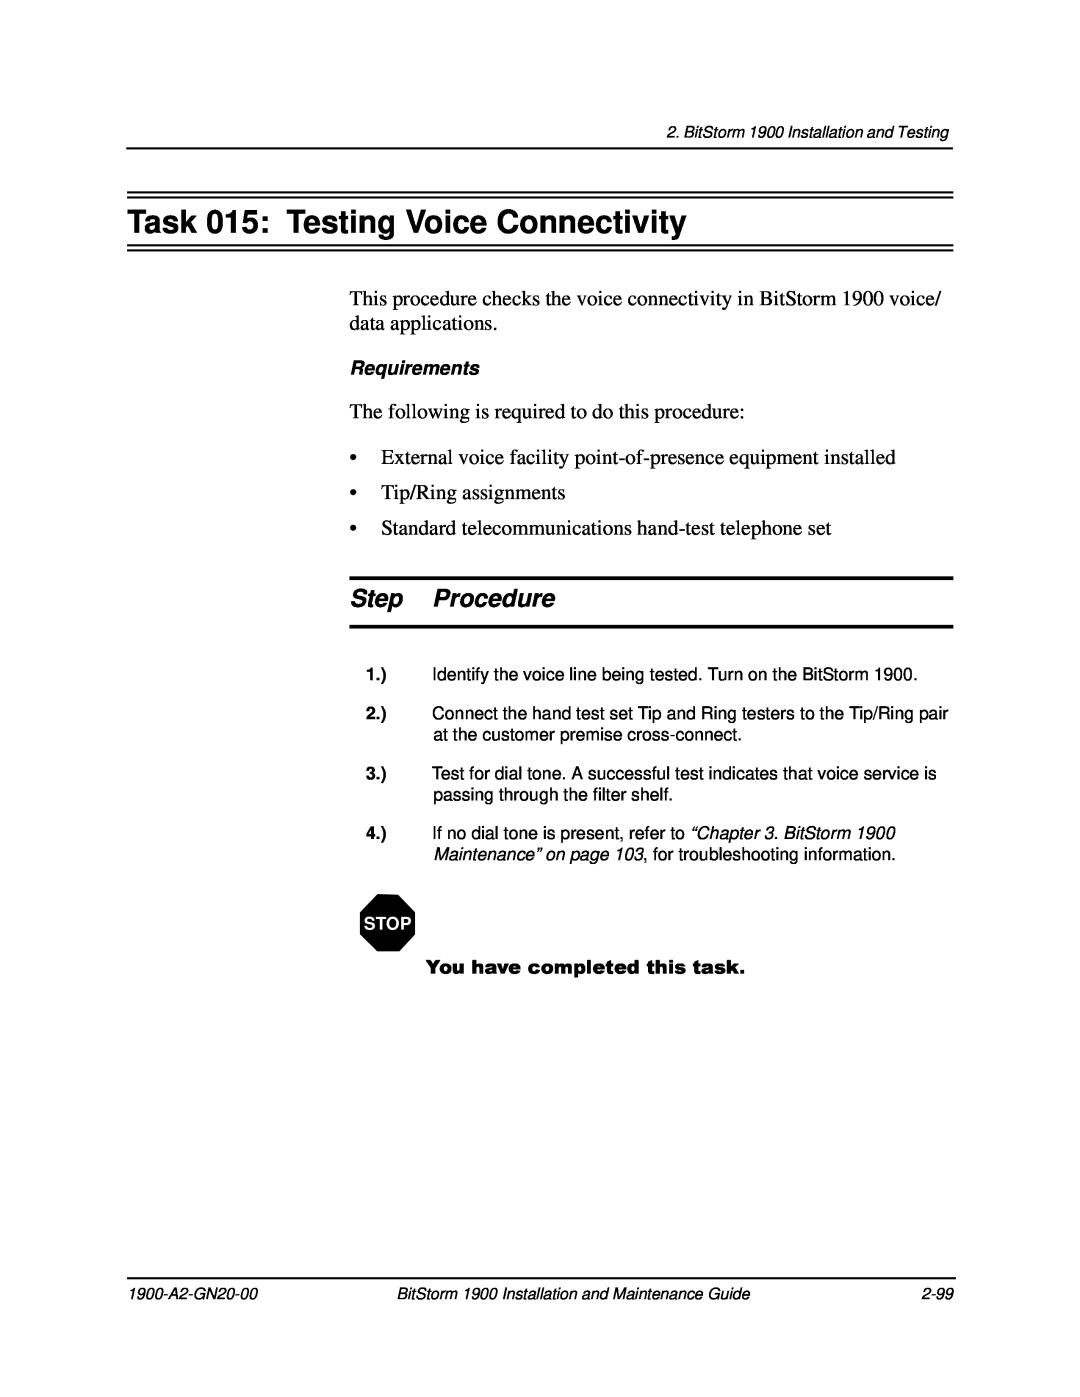 Paradyne 1900 manual Task 015 Testing Voice Connectivity, Step Procedure 